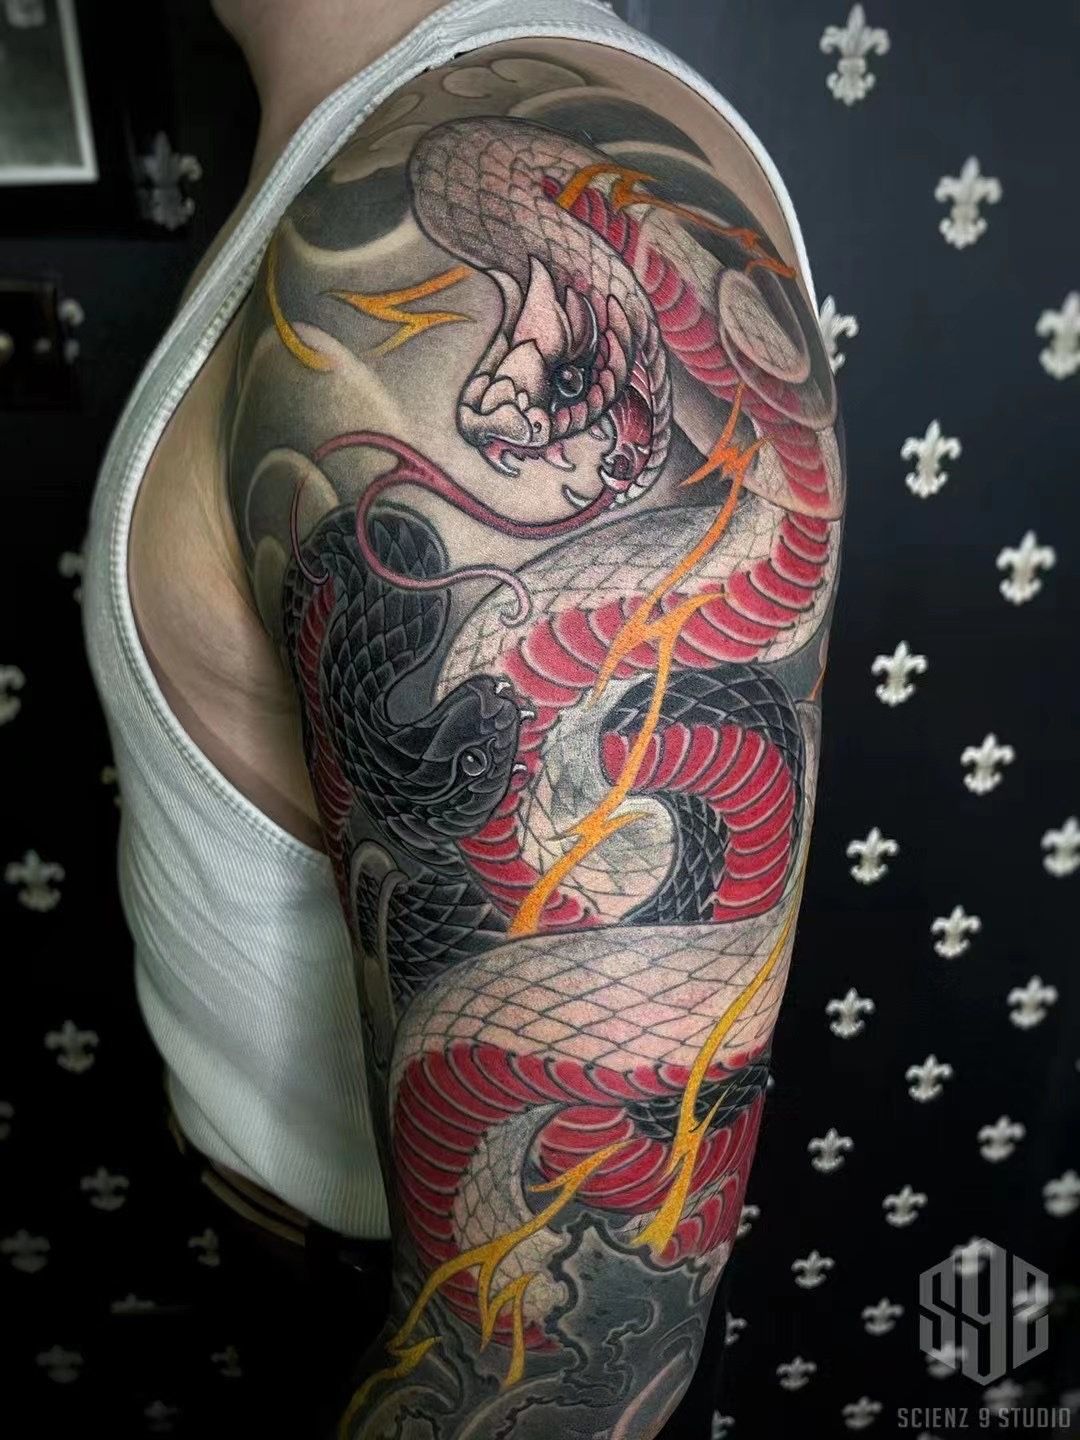 JAPANESE SNAKE HALFSLEEVE  Adikt Ink Tattoo Studios  Facebook